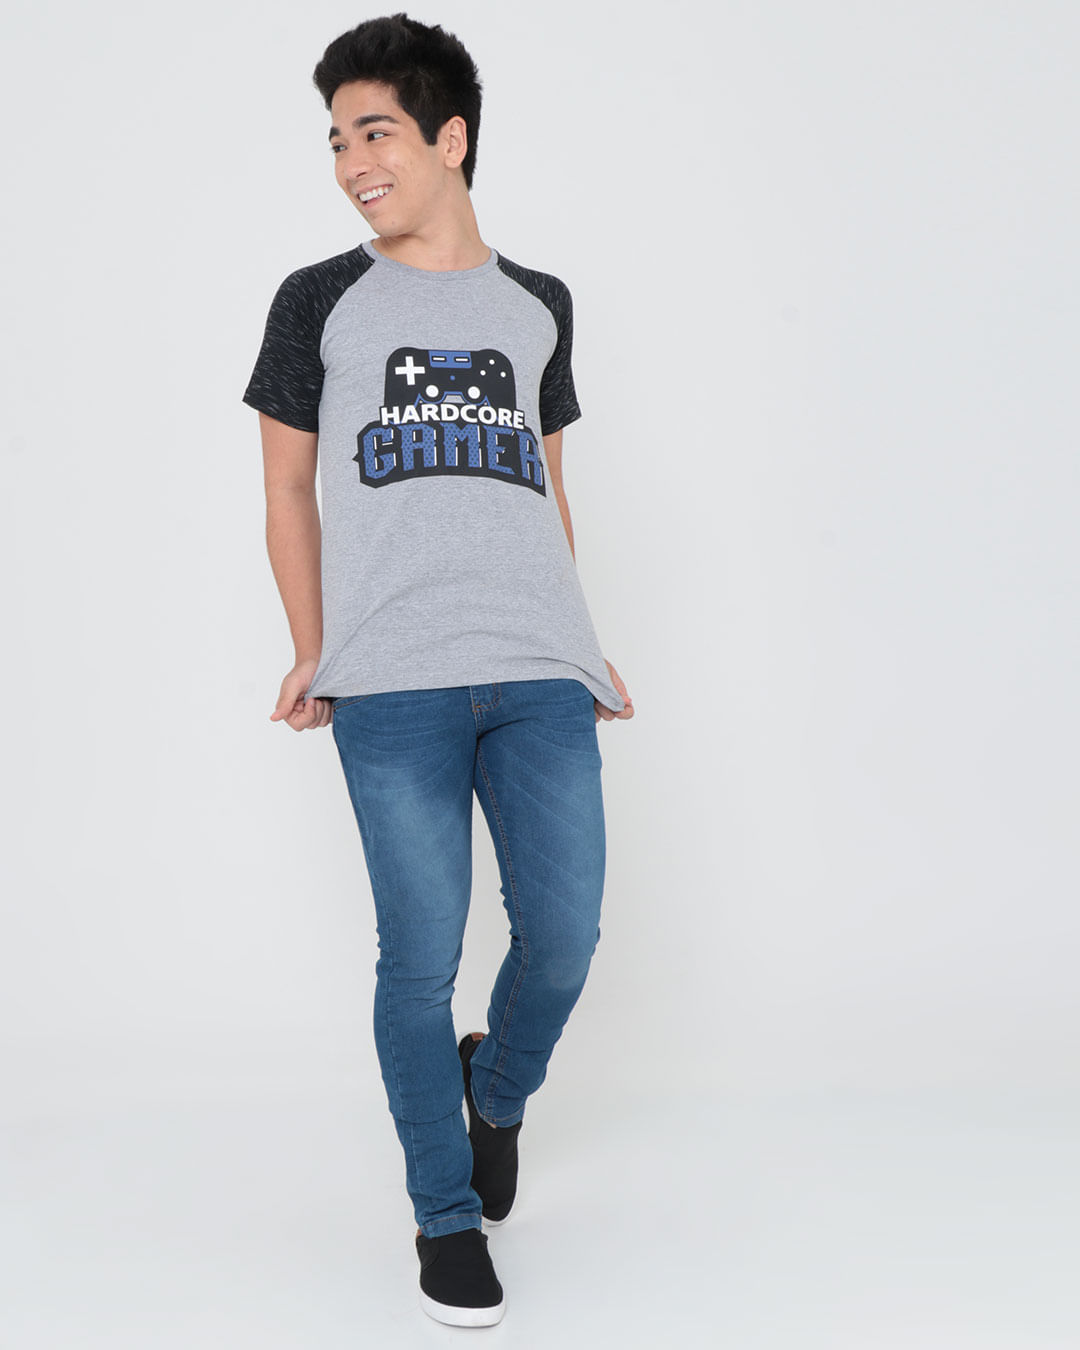 Camiseta-29824-Mc-M1016-Street---Cinza-Claro